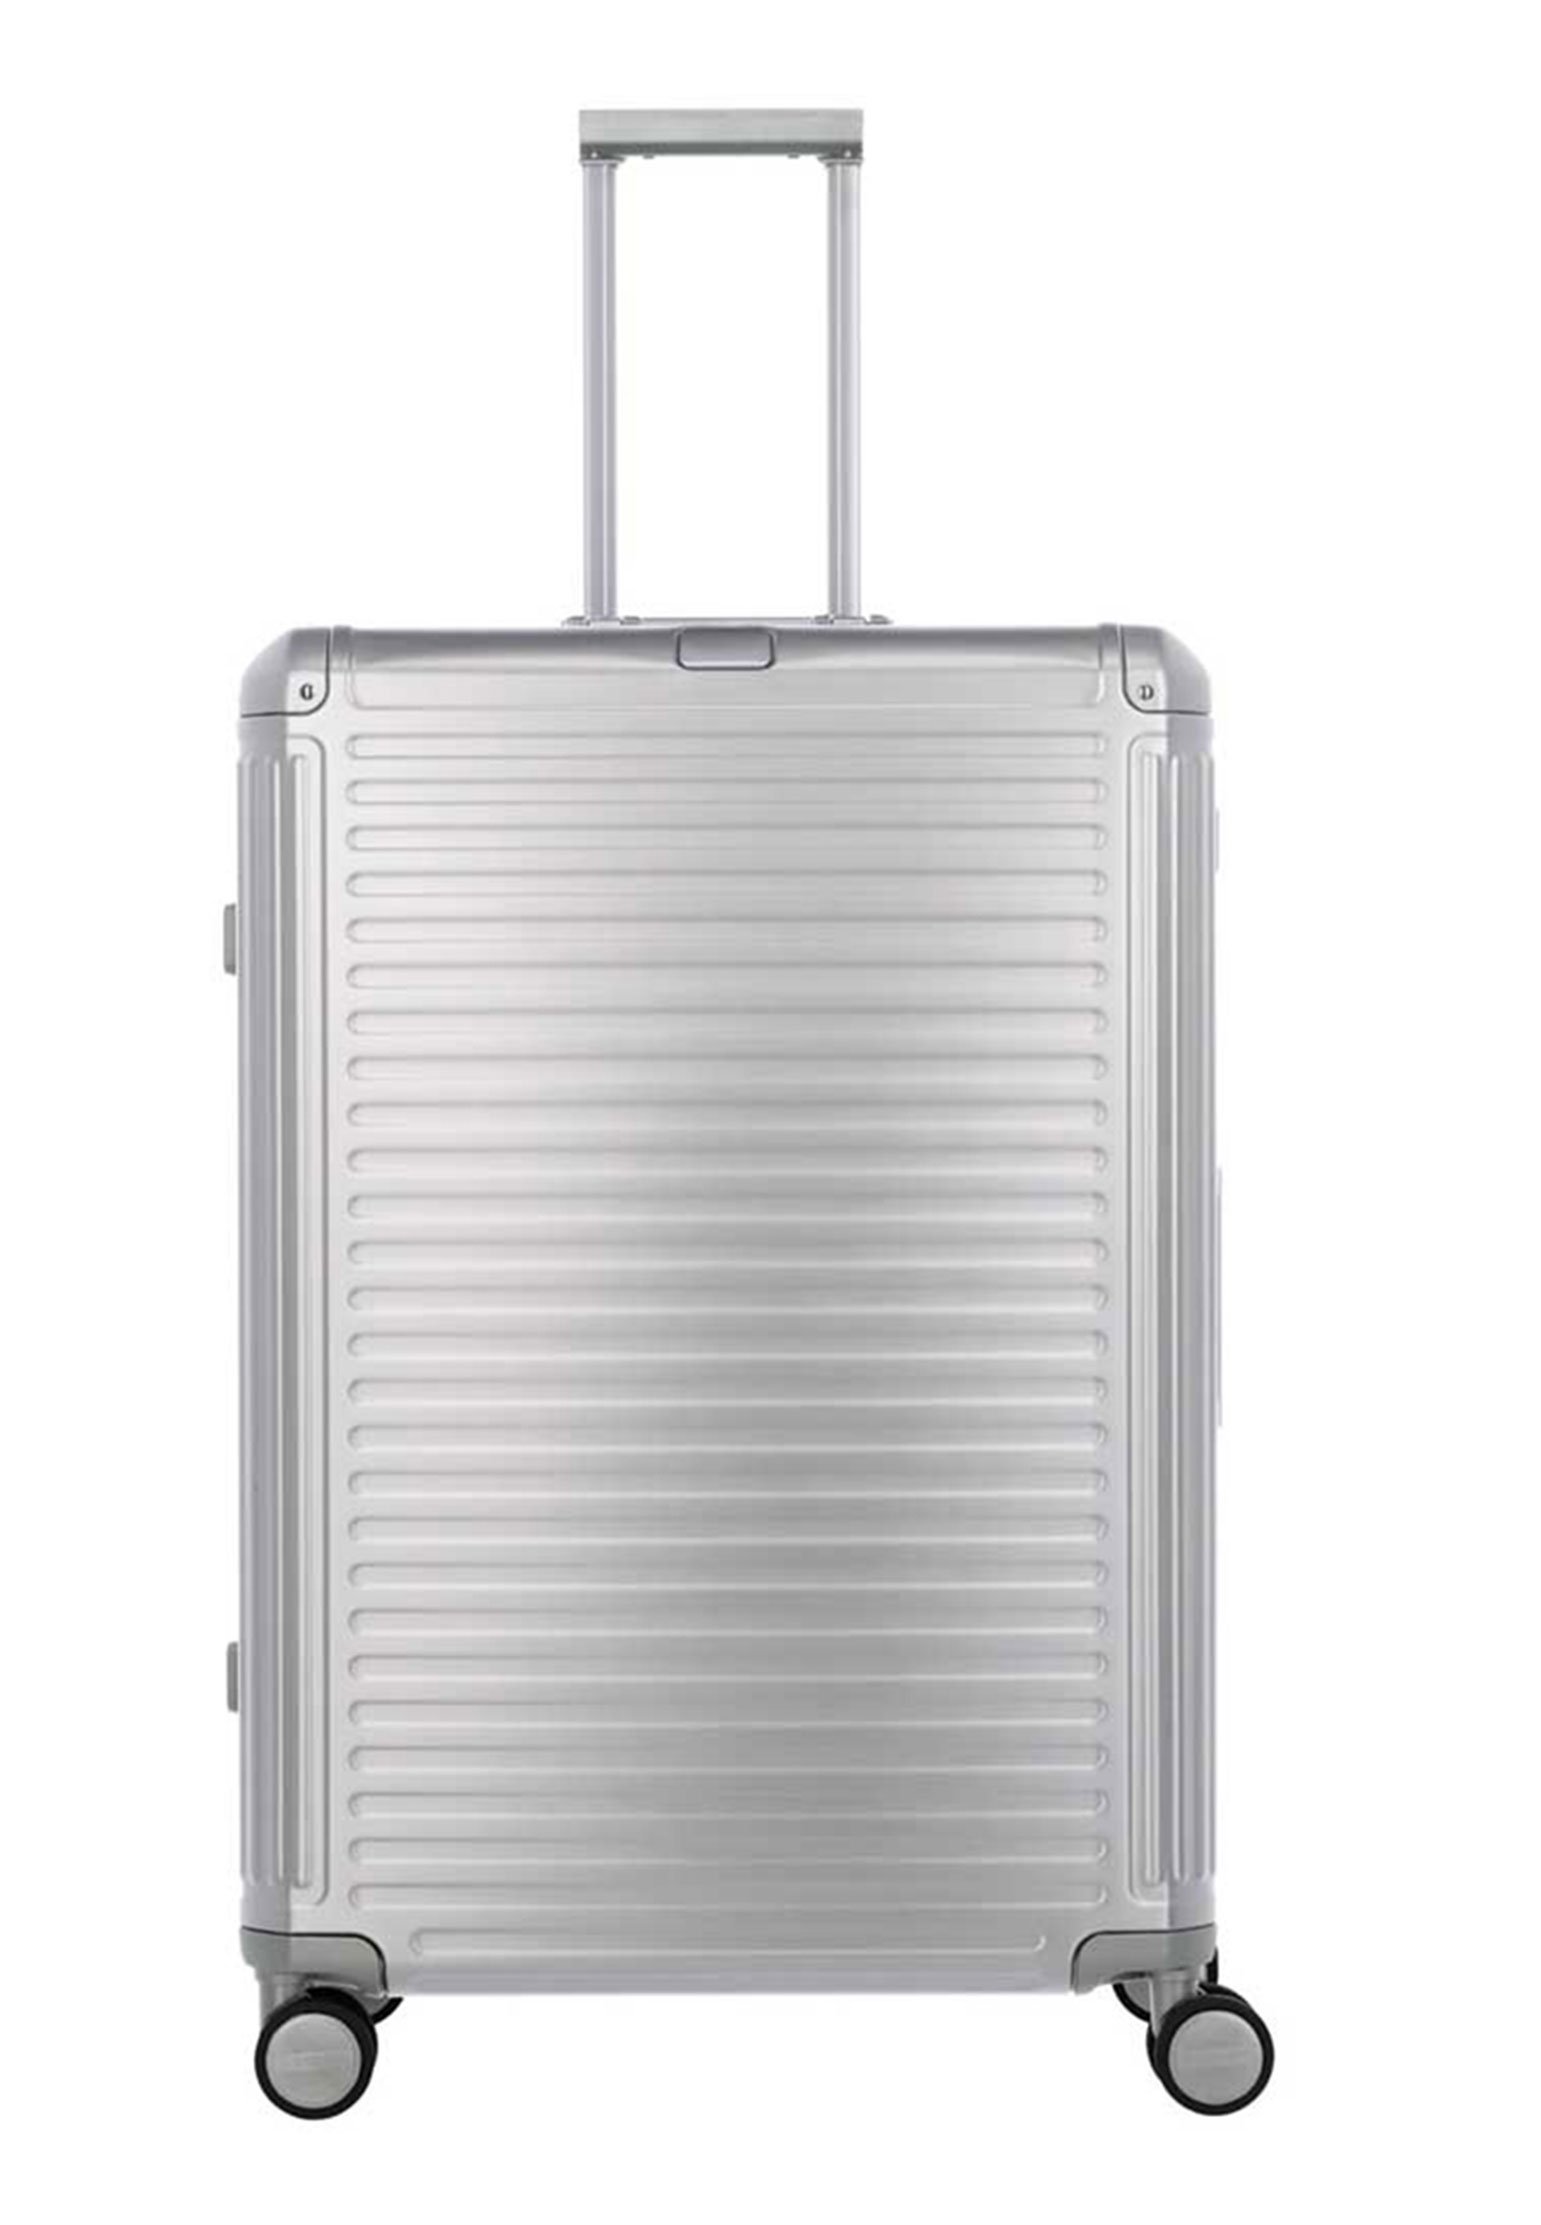 Bag TRAVELITE Color: silver (Code: 3401) in online store Allure